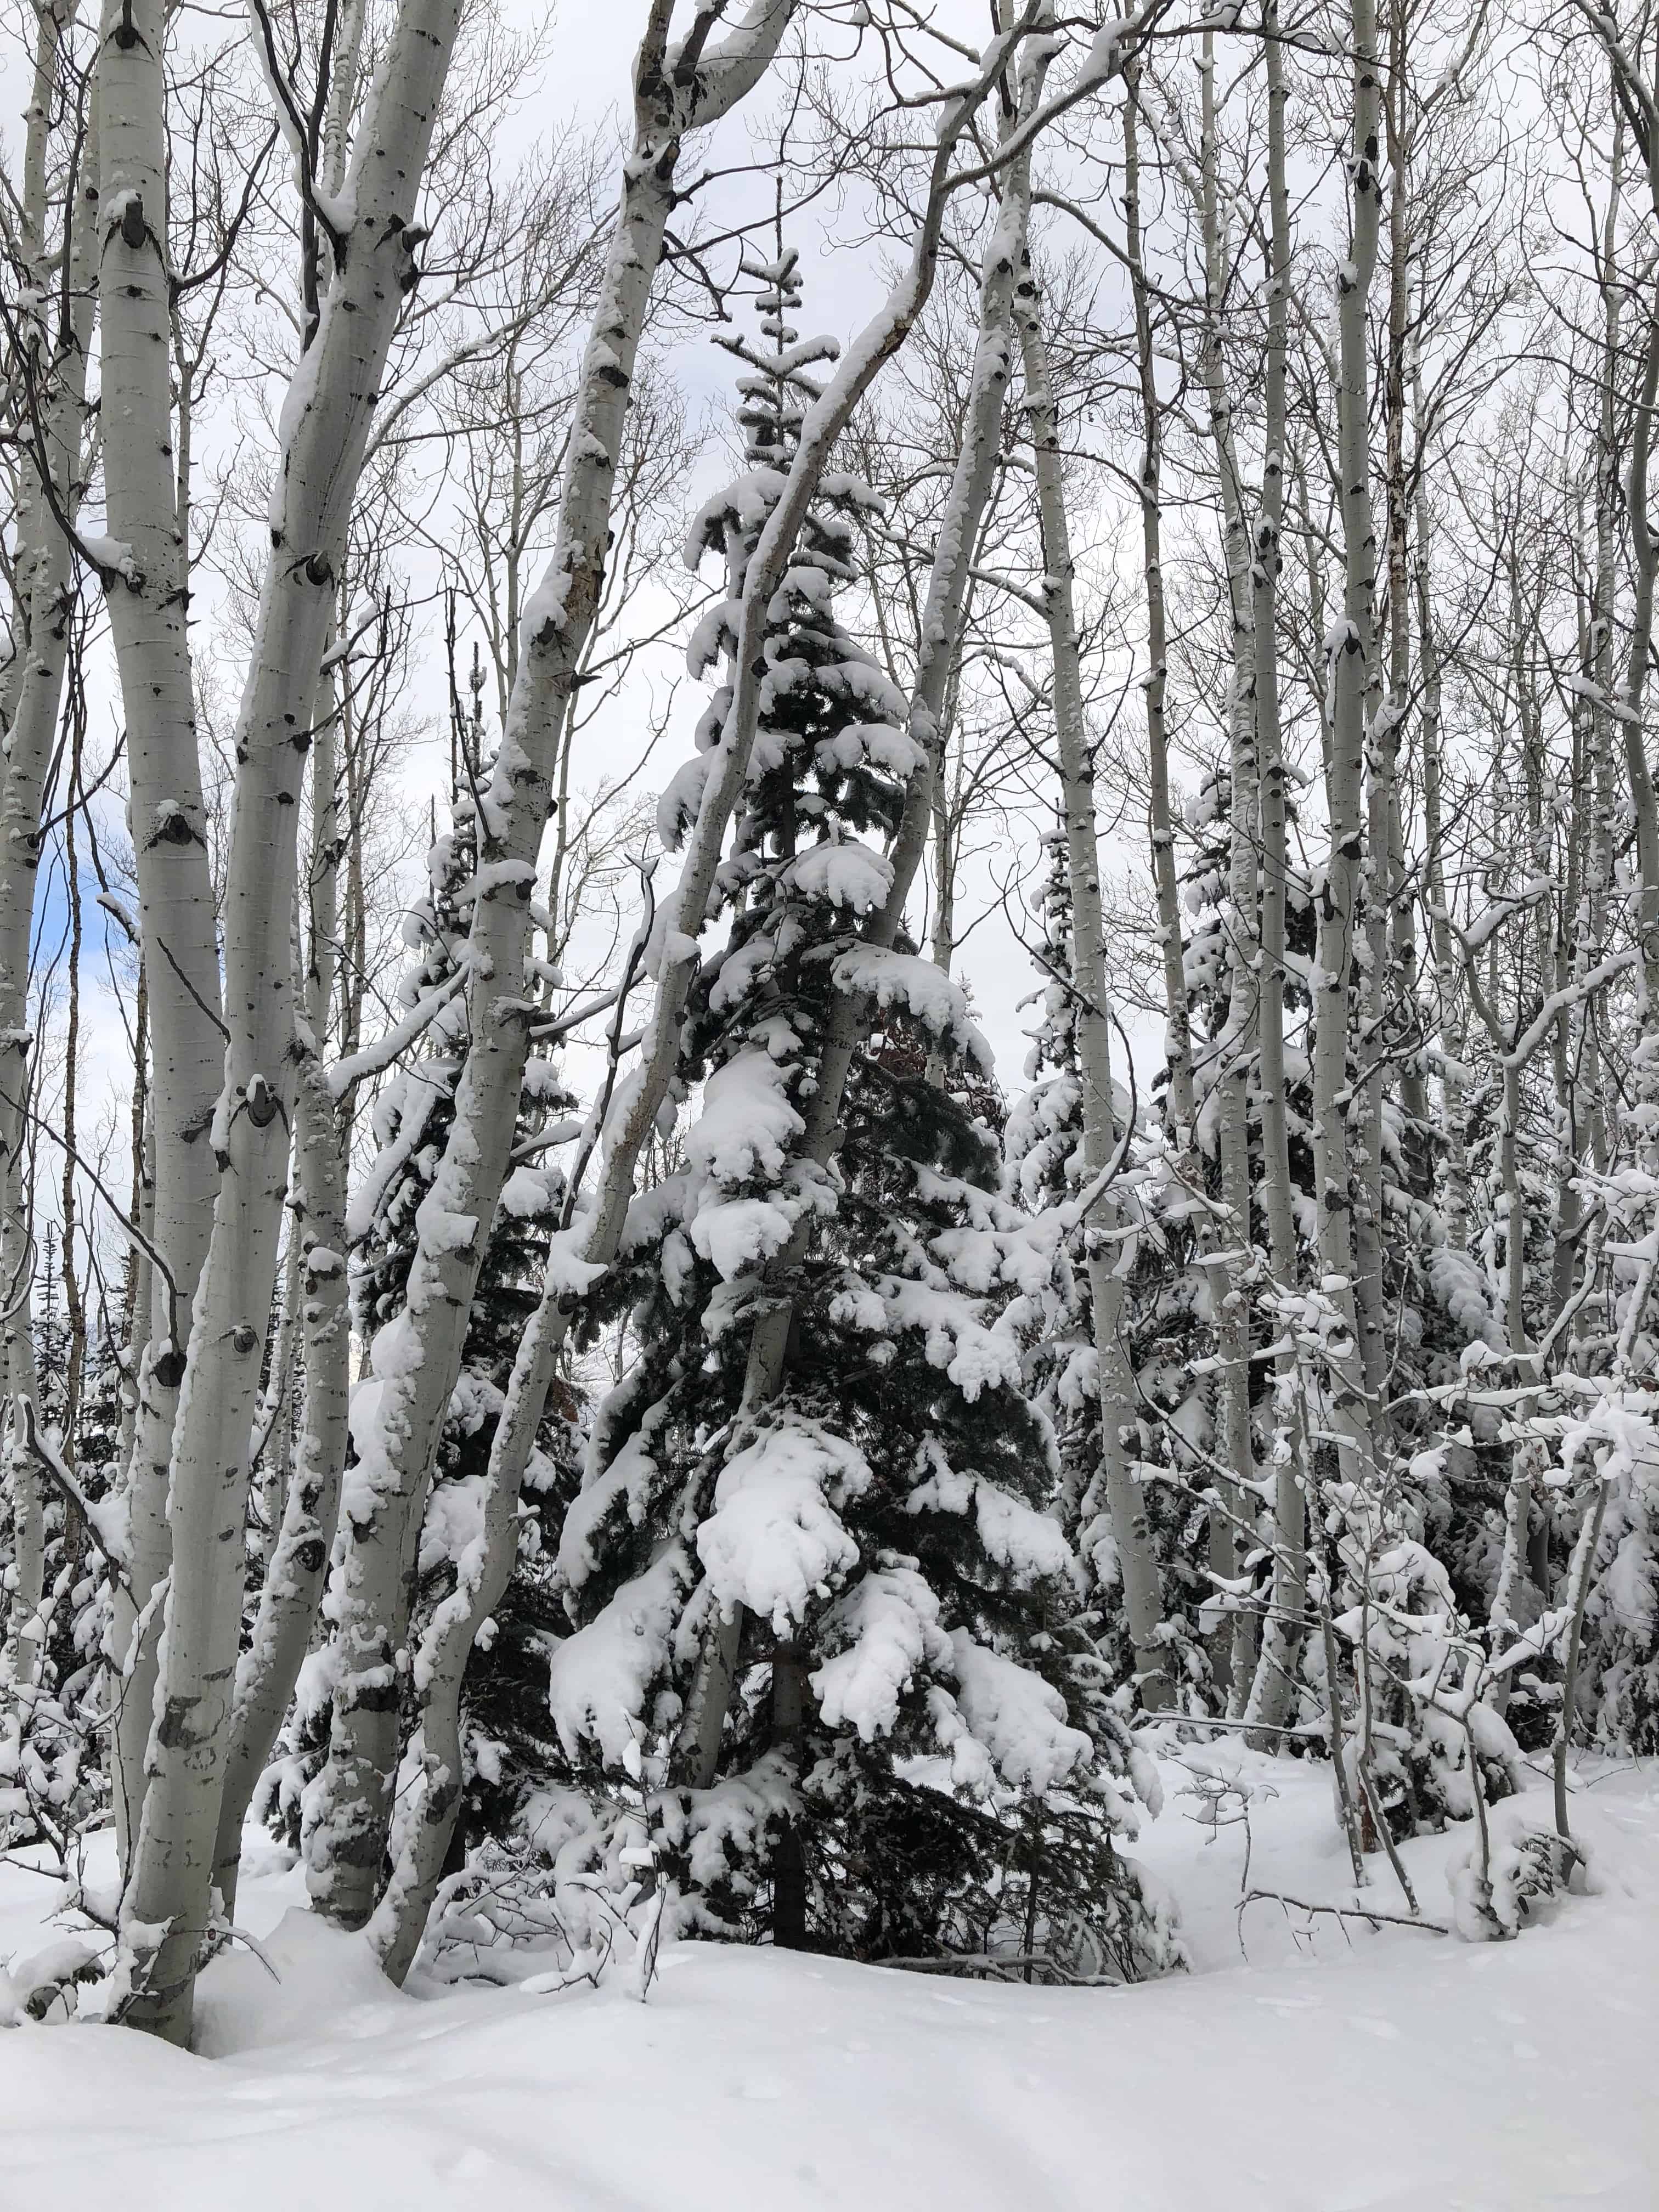 Aspen trees in the winter in Steamboat Springs, CO.